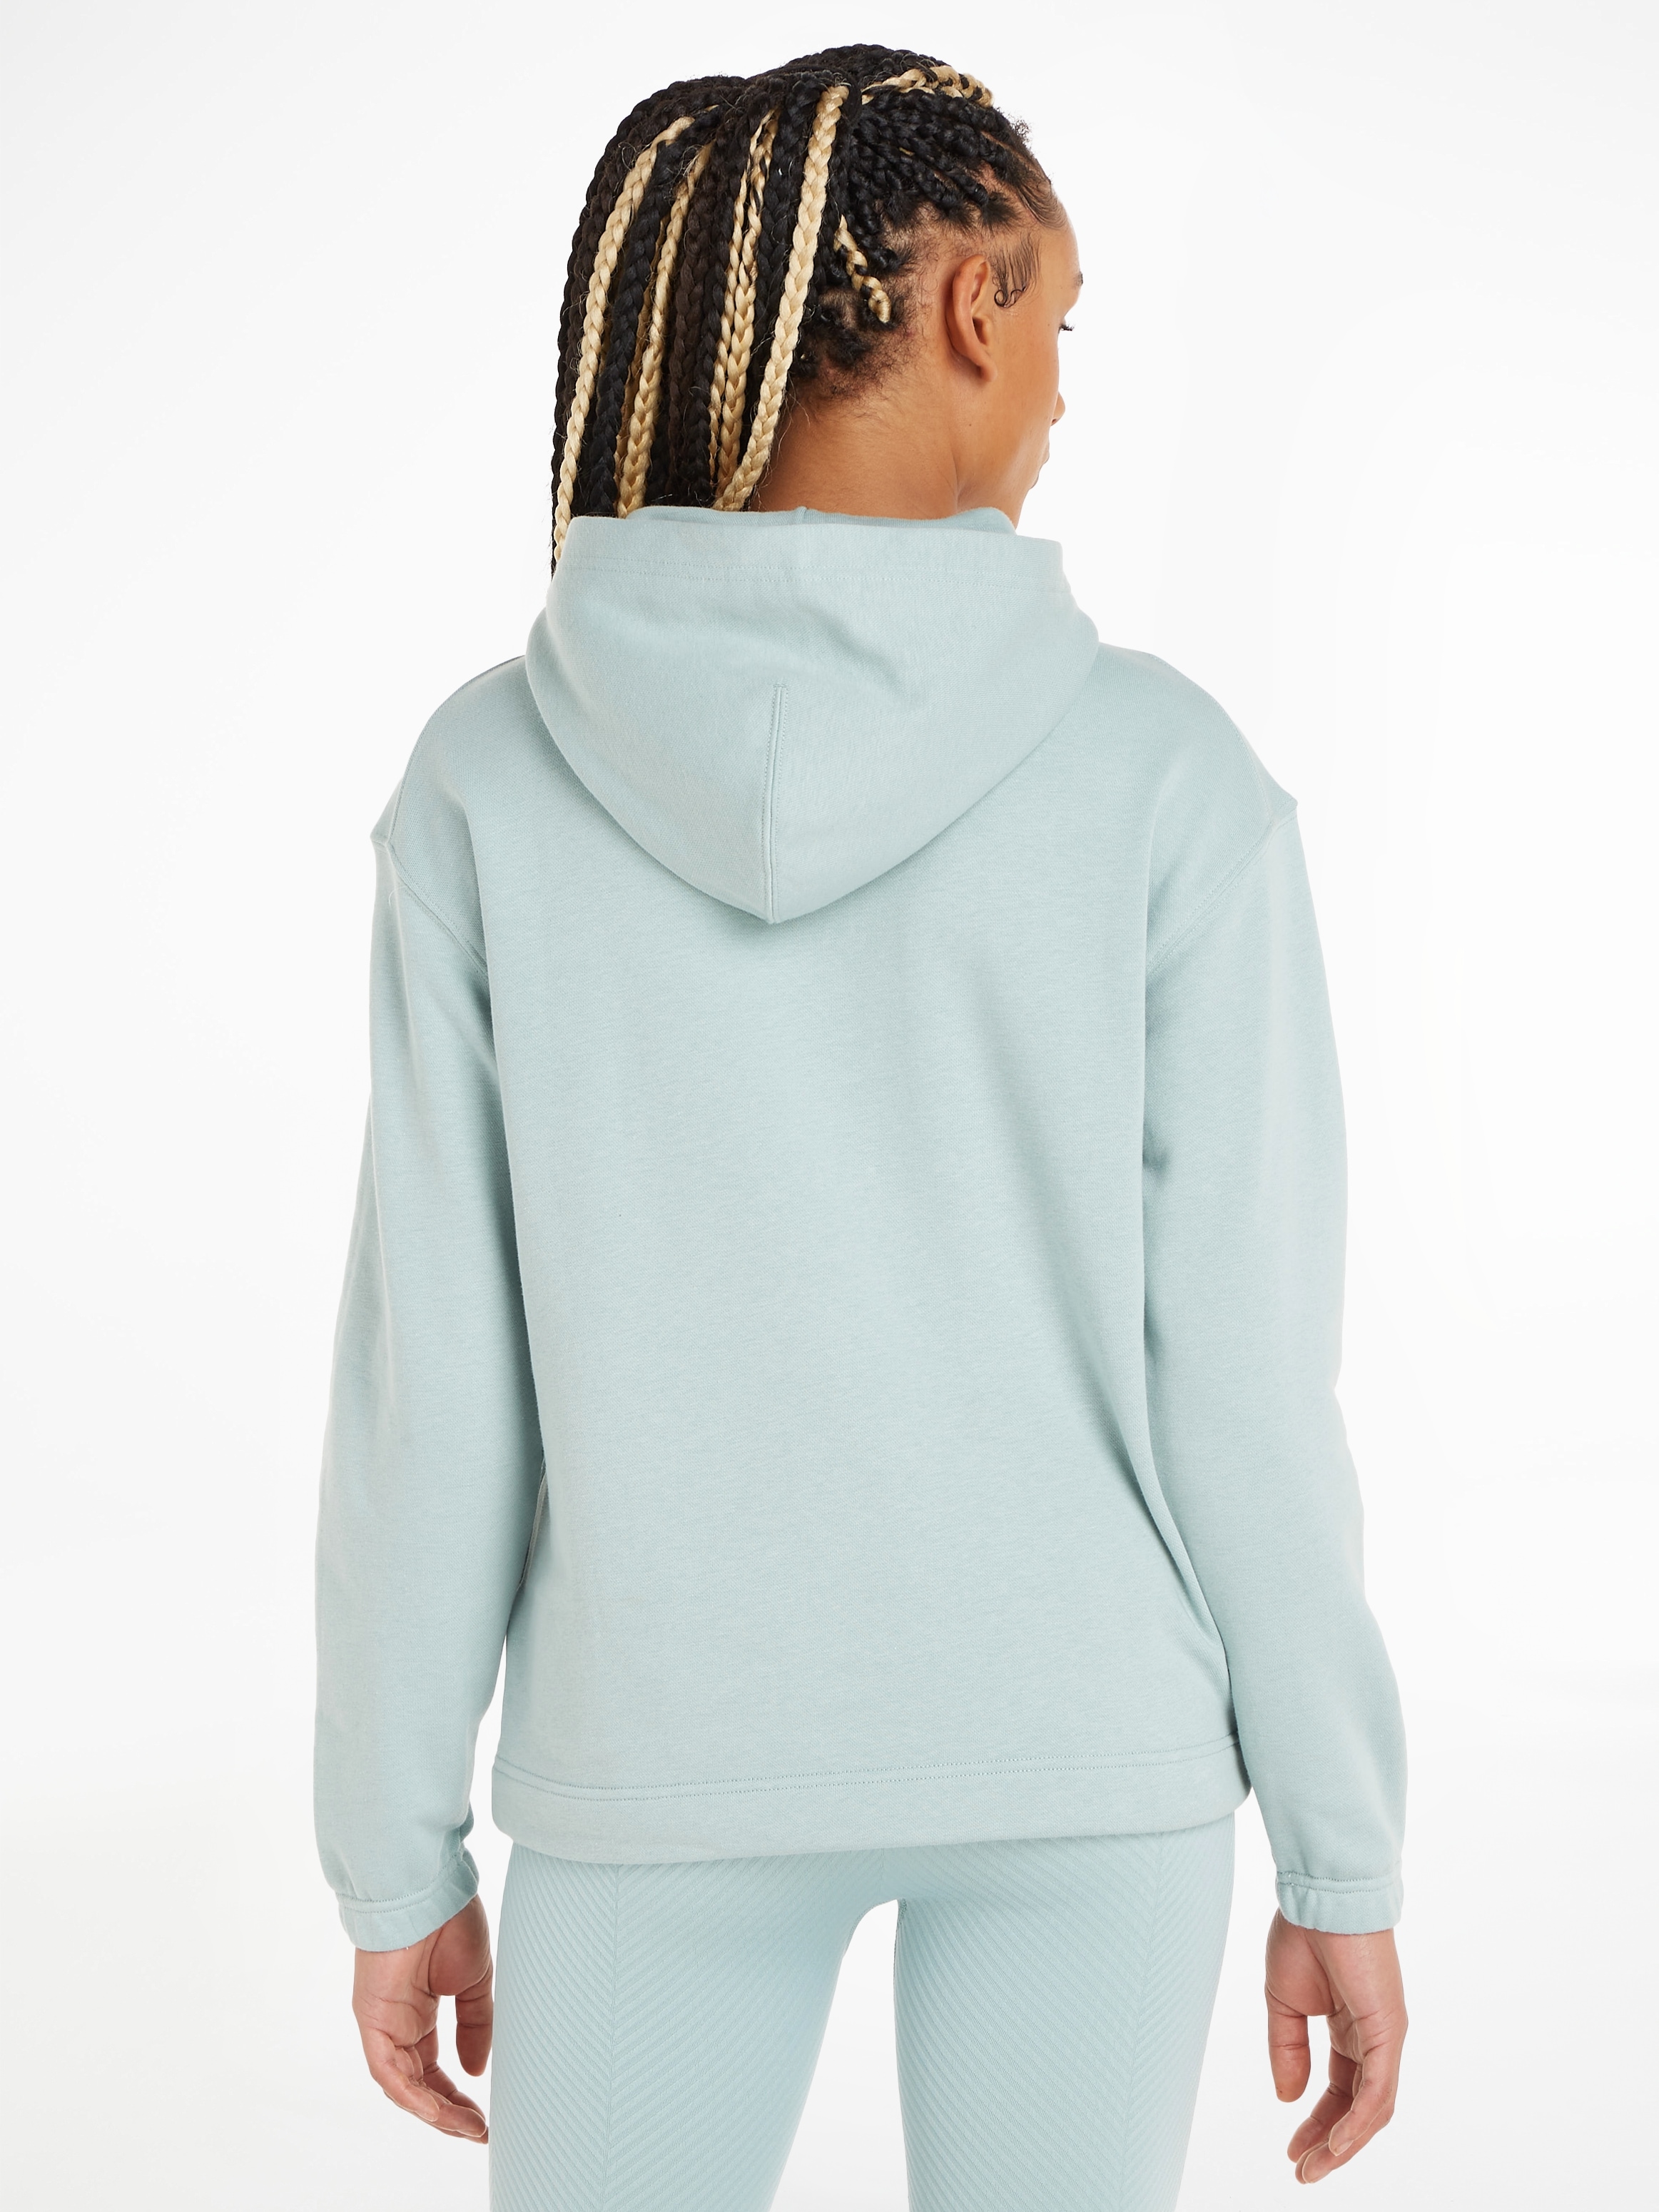 Calvin Klein Sport Kapuzensweatshirt »Sweatshirt PW - Hoodie« bei